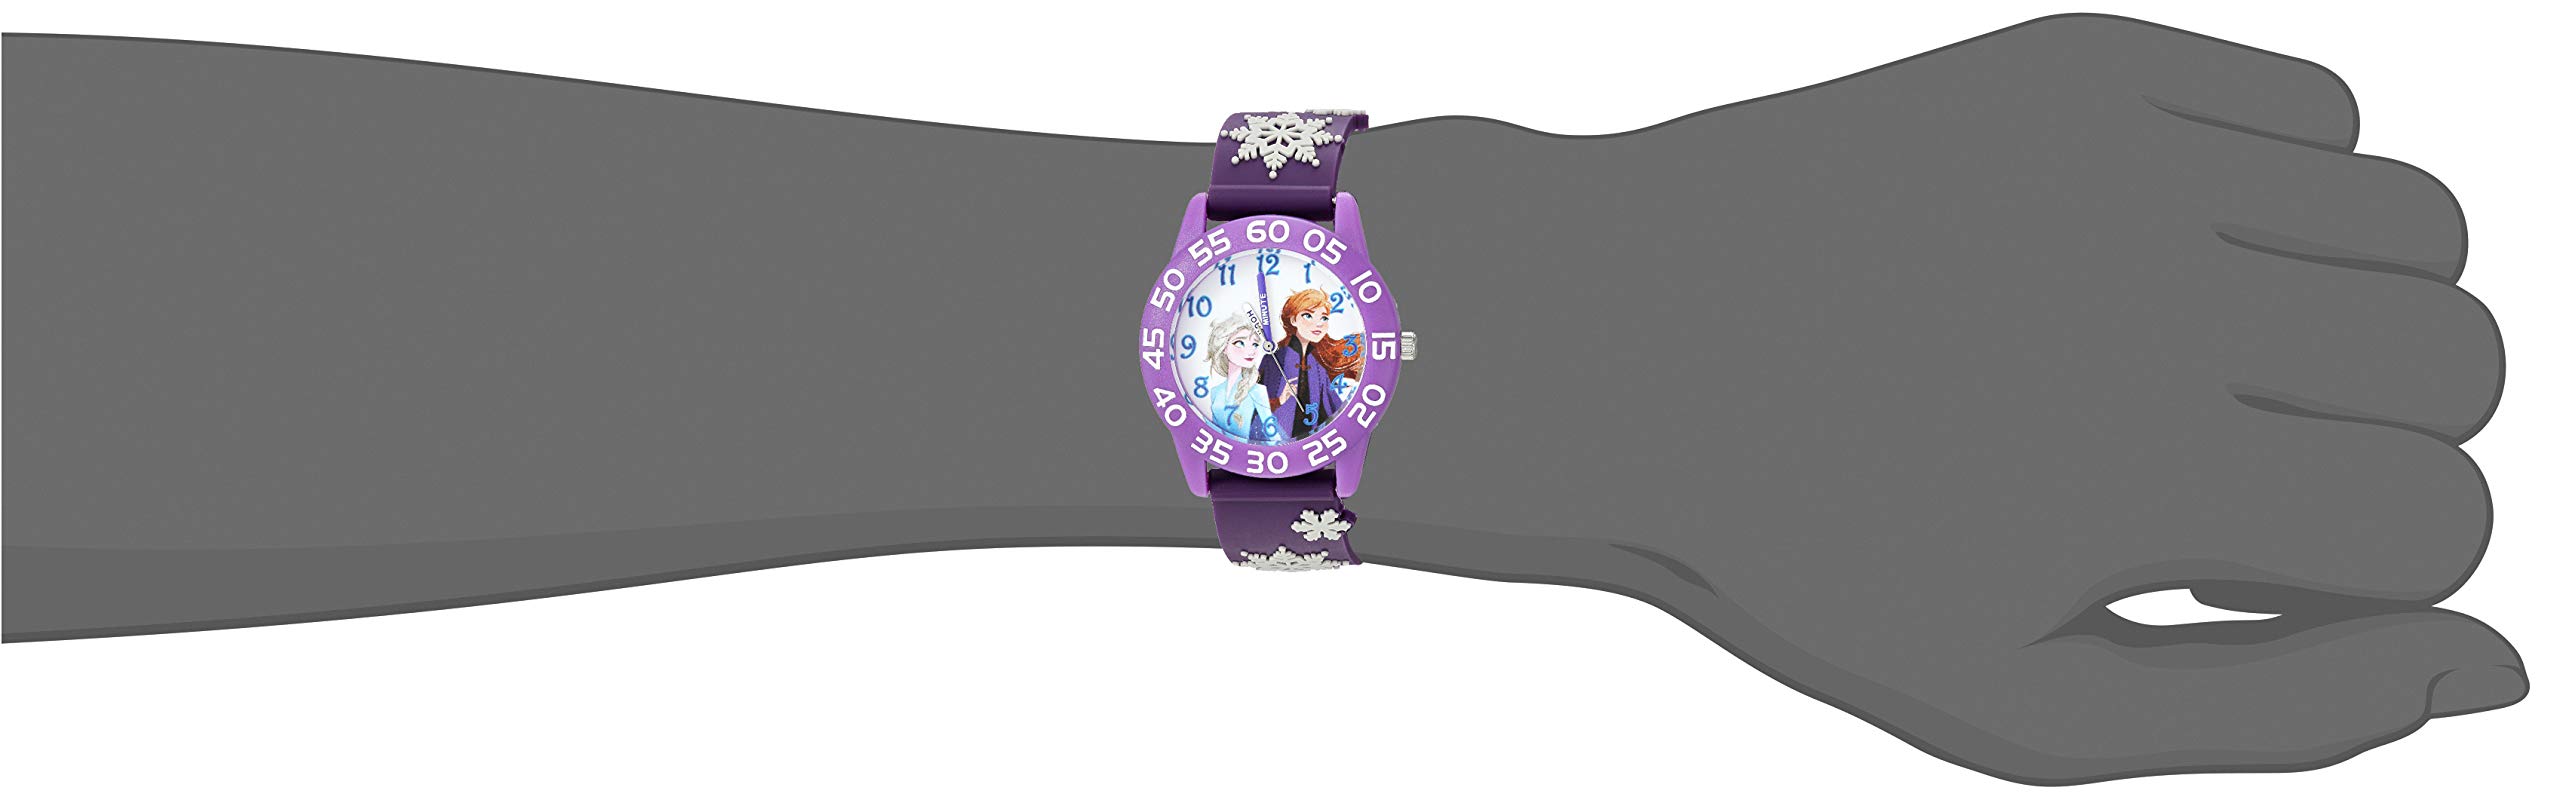 Disney Frozen Kids' Plastic Time Teacher Analog Quartz 3D Strap Watch